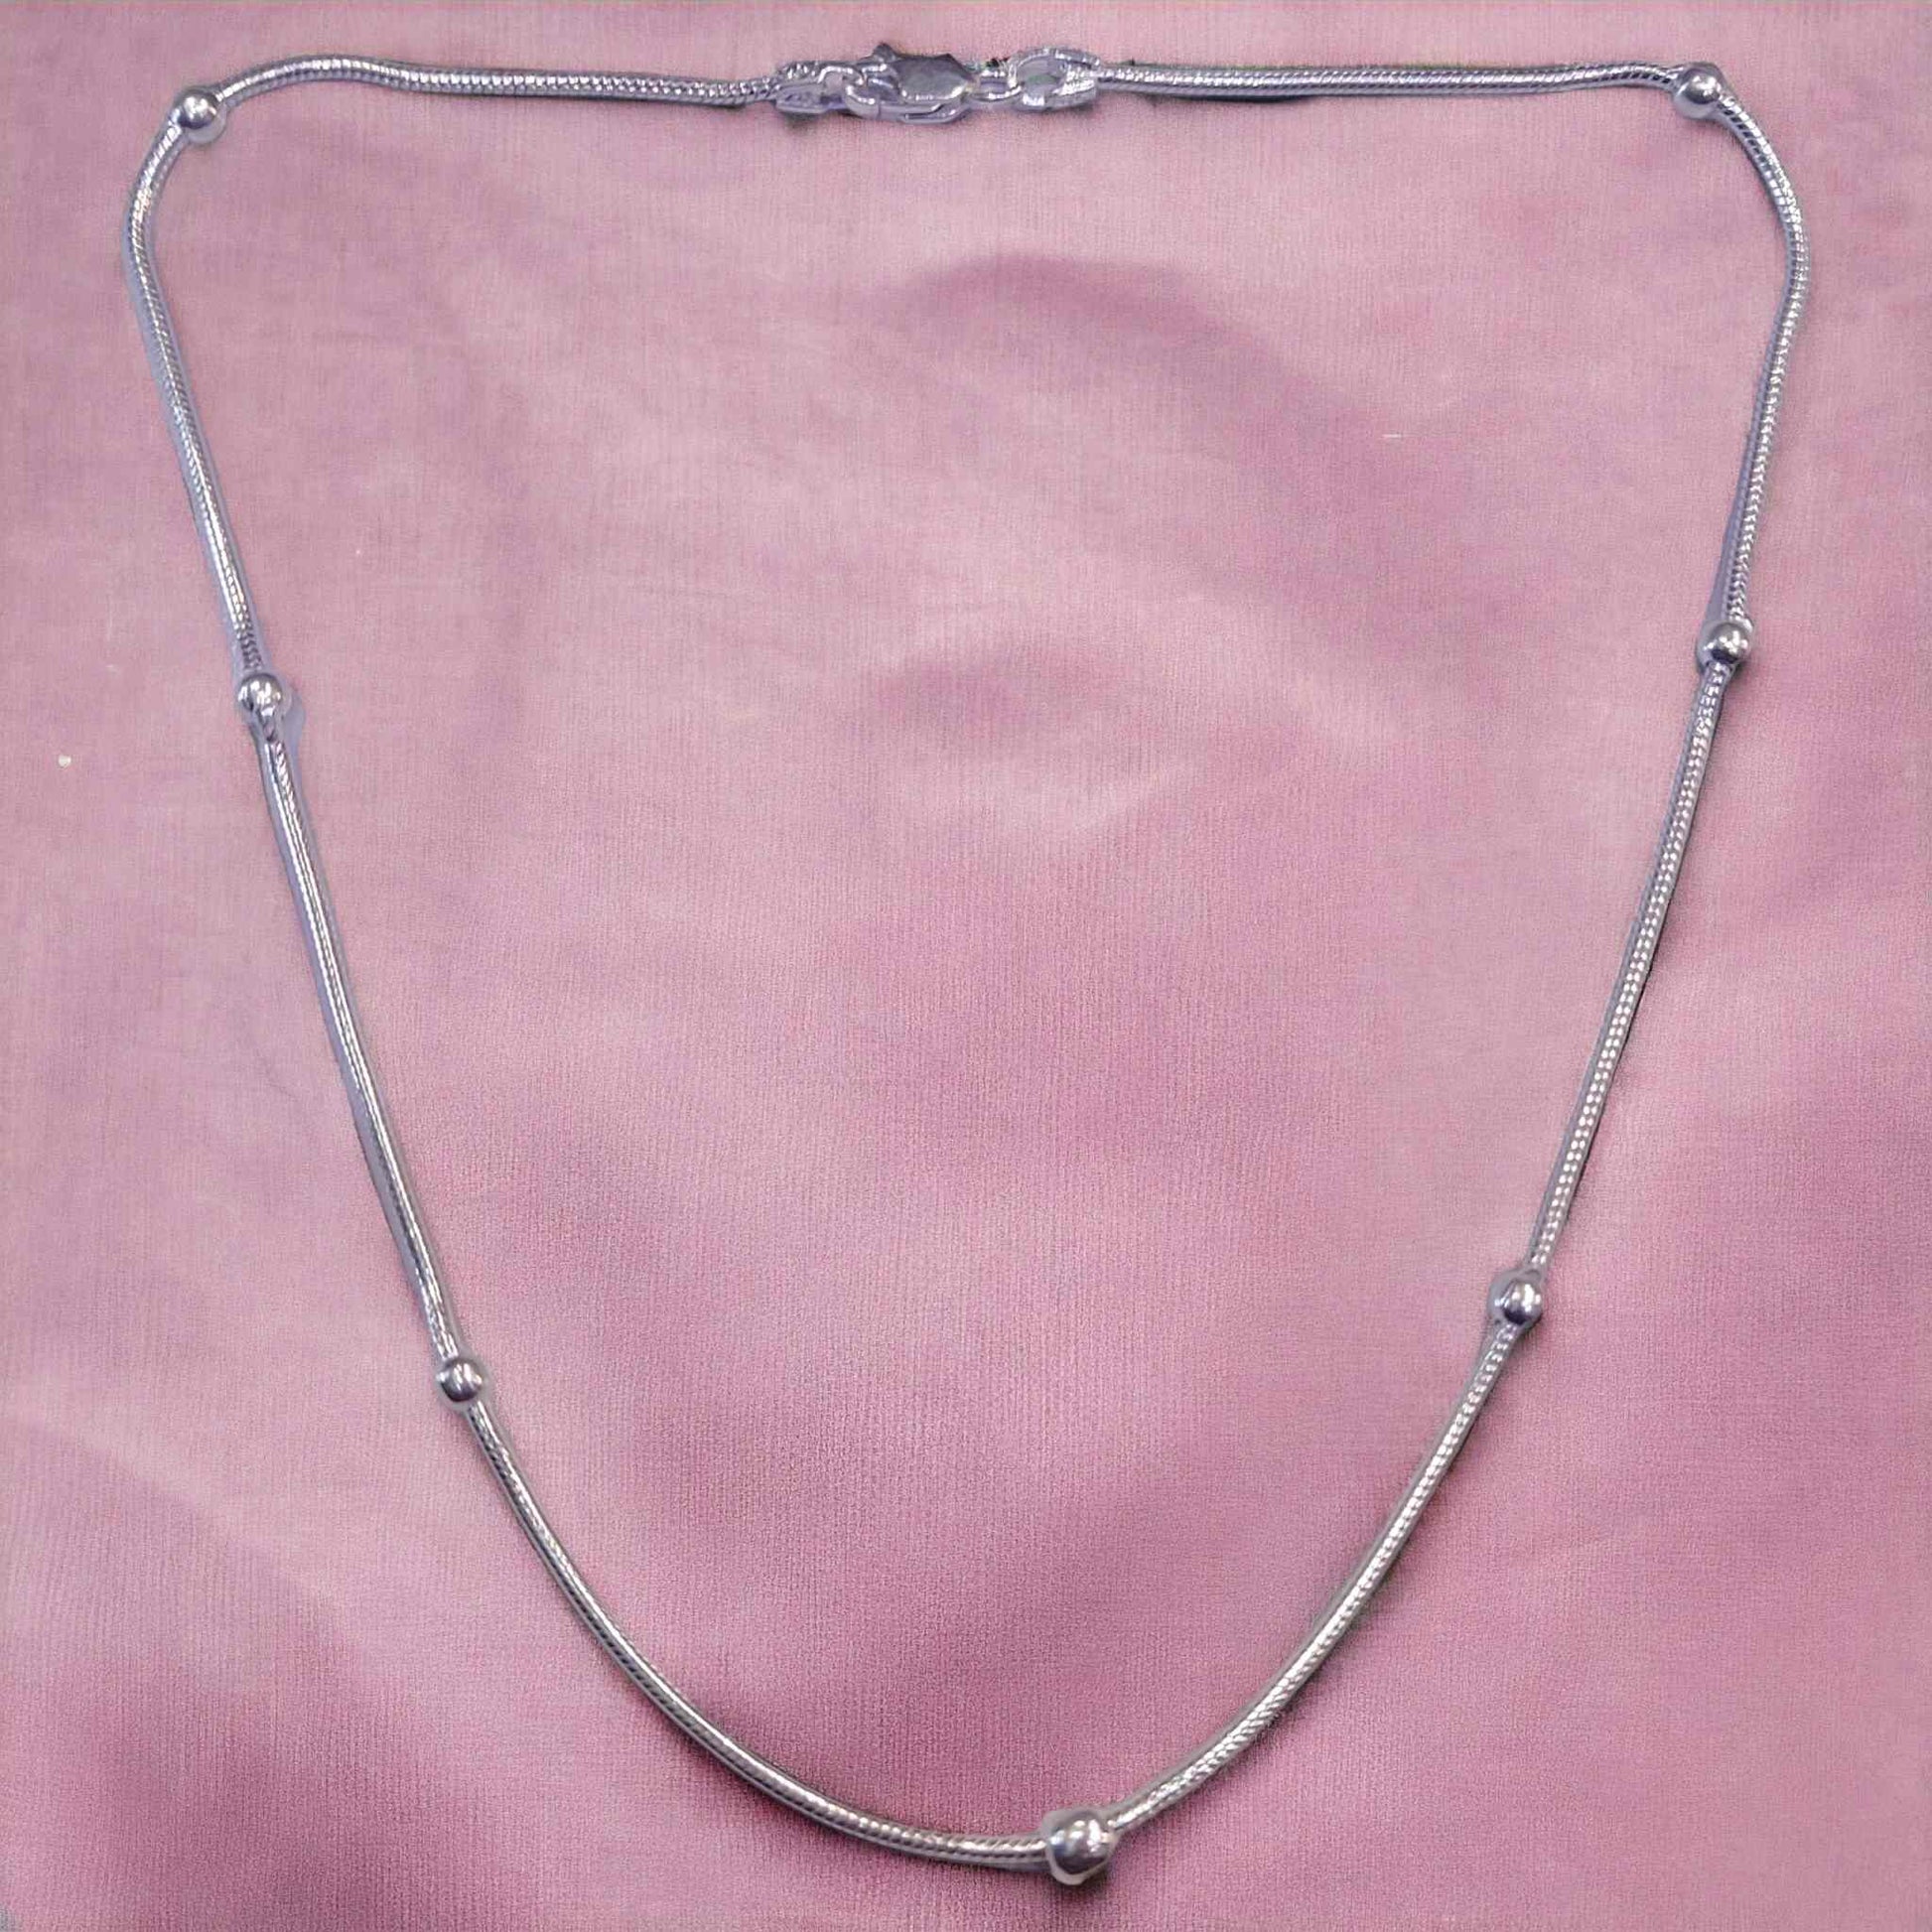 Fancy silver chain for women - jauhari Jewellers